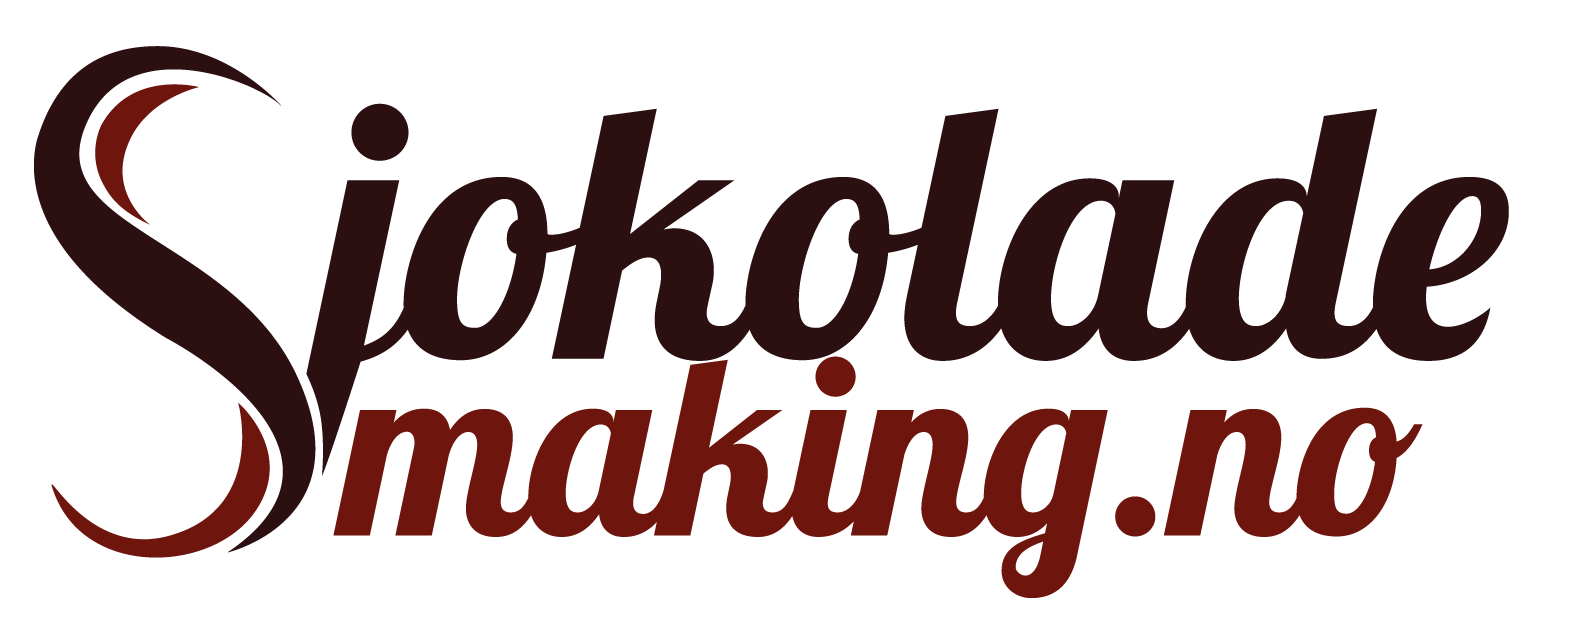 Sjokoladesmaking logo